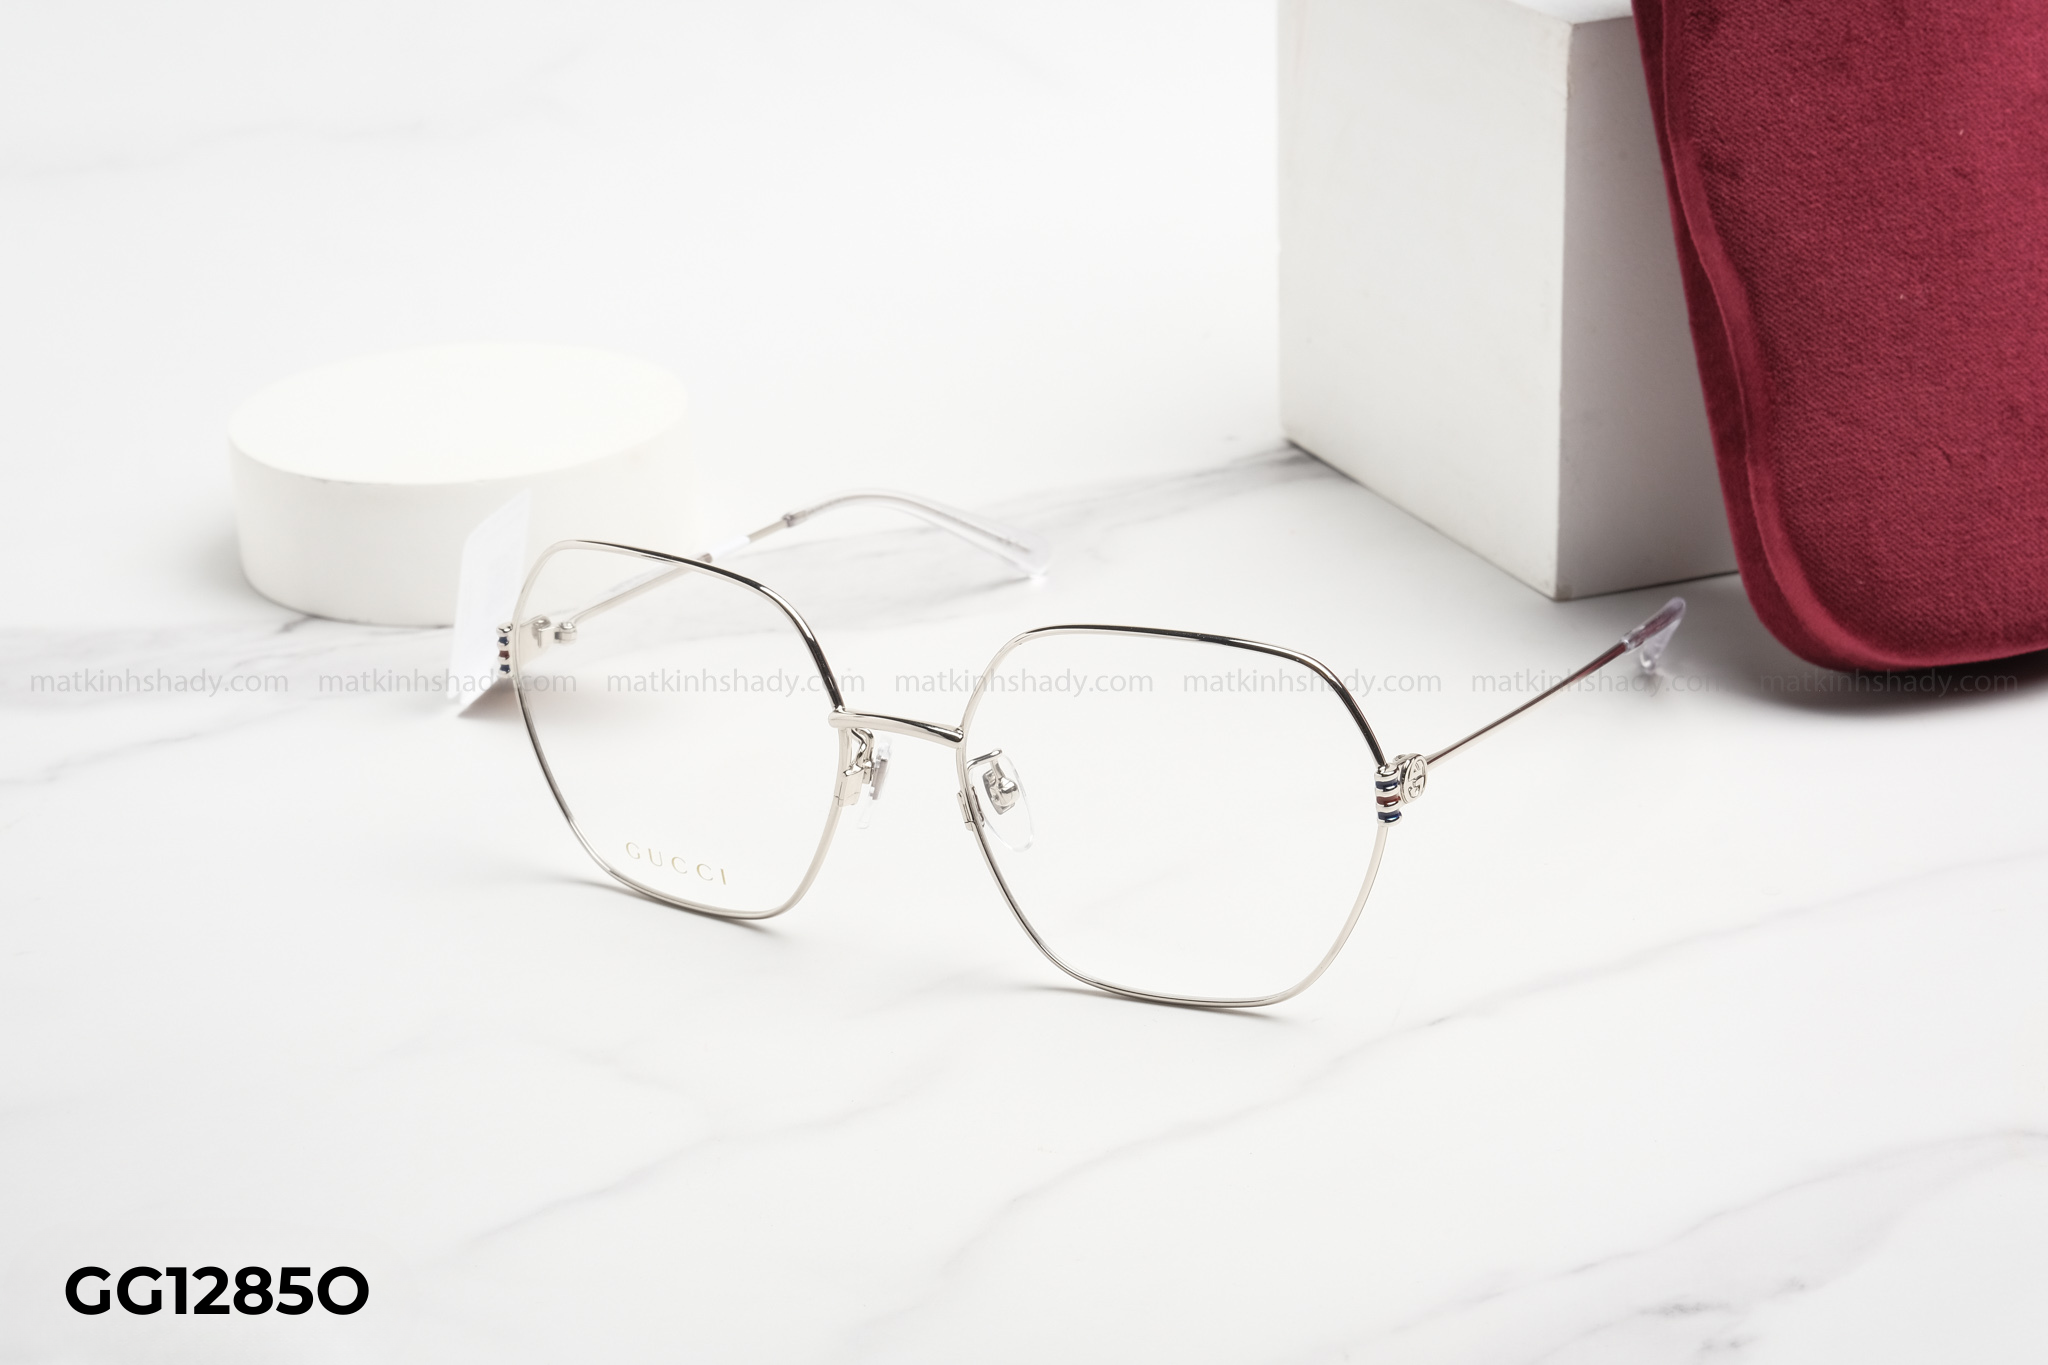  Gucci Eyewear - Glasses - GG1285O 